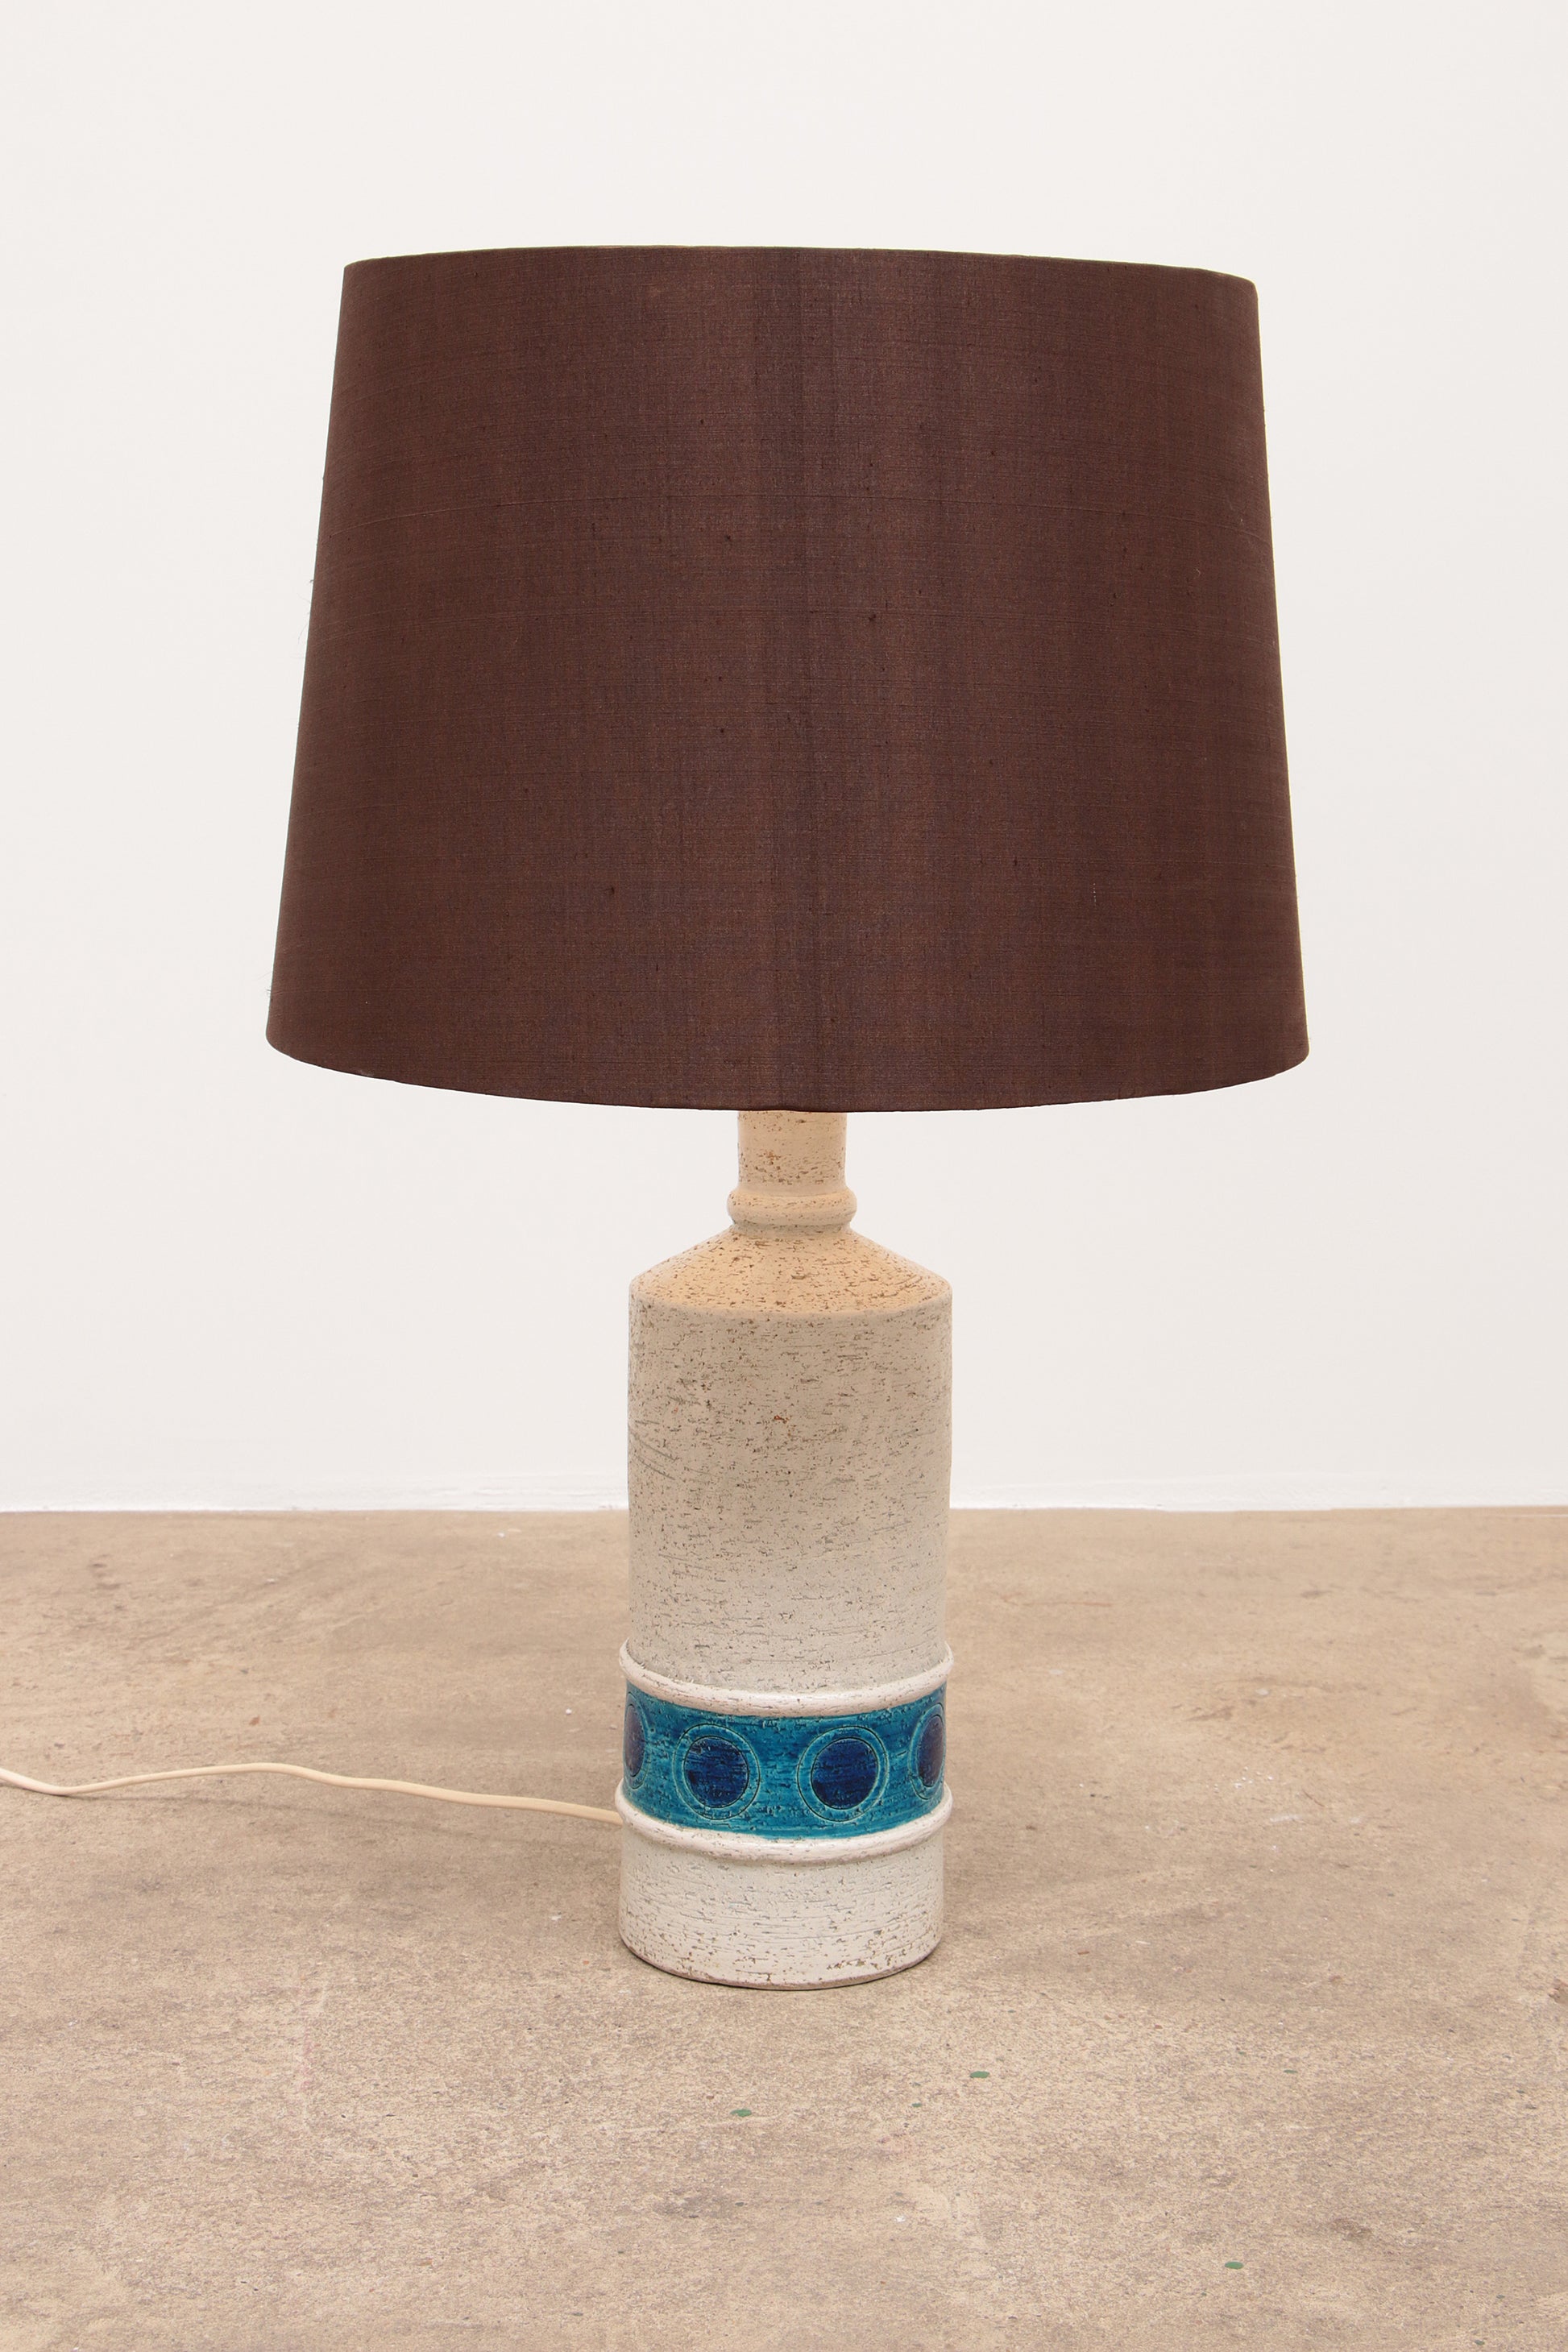 Tafellamp van keramiek ontwerp van Aldo Londi door Bergboms,1960s